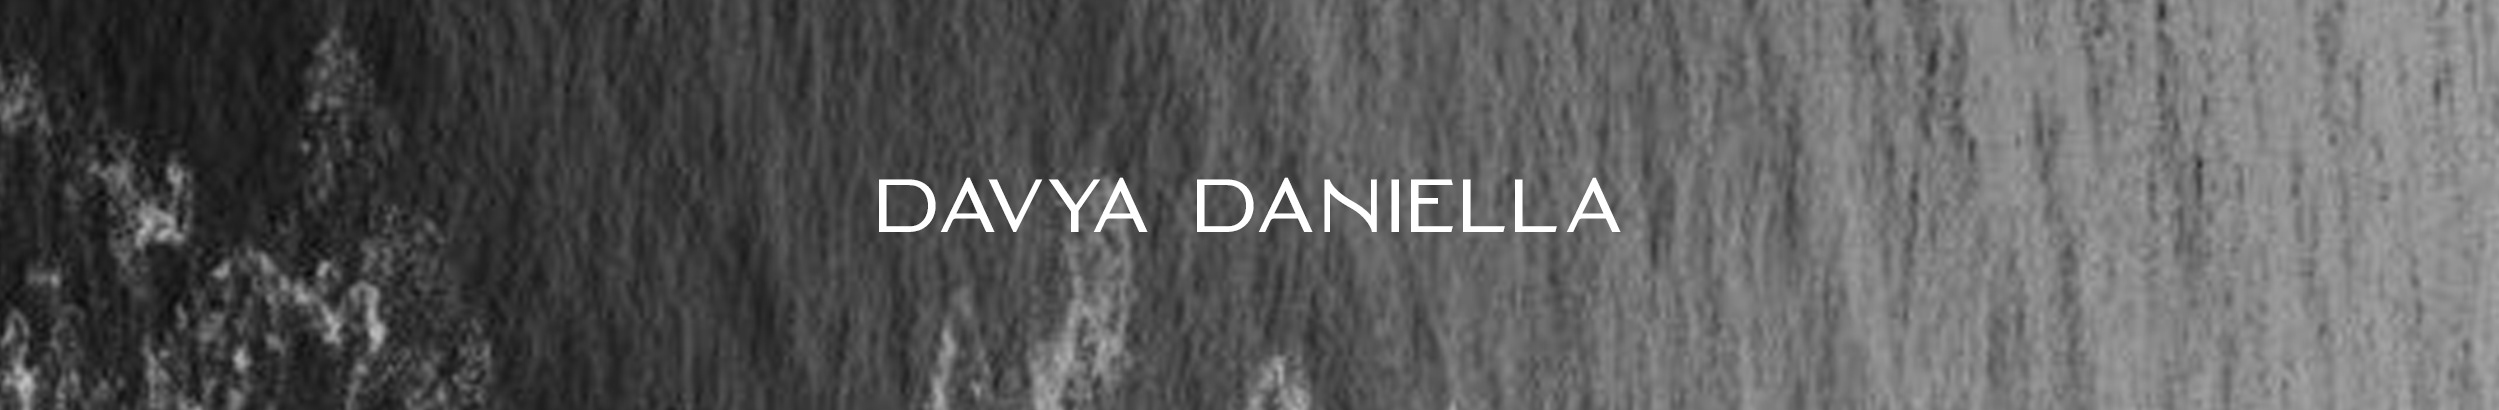 Davya Daniella's profile banner